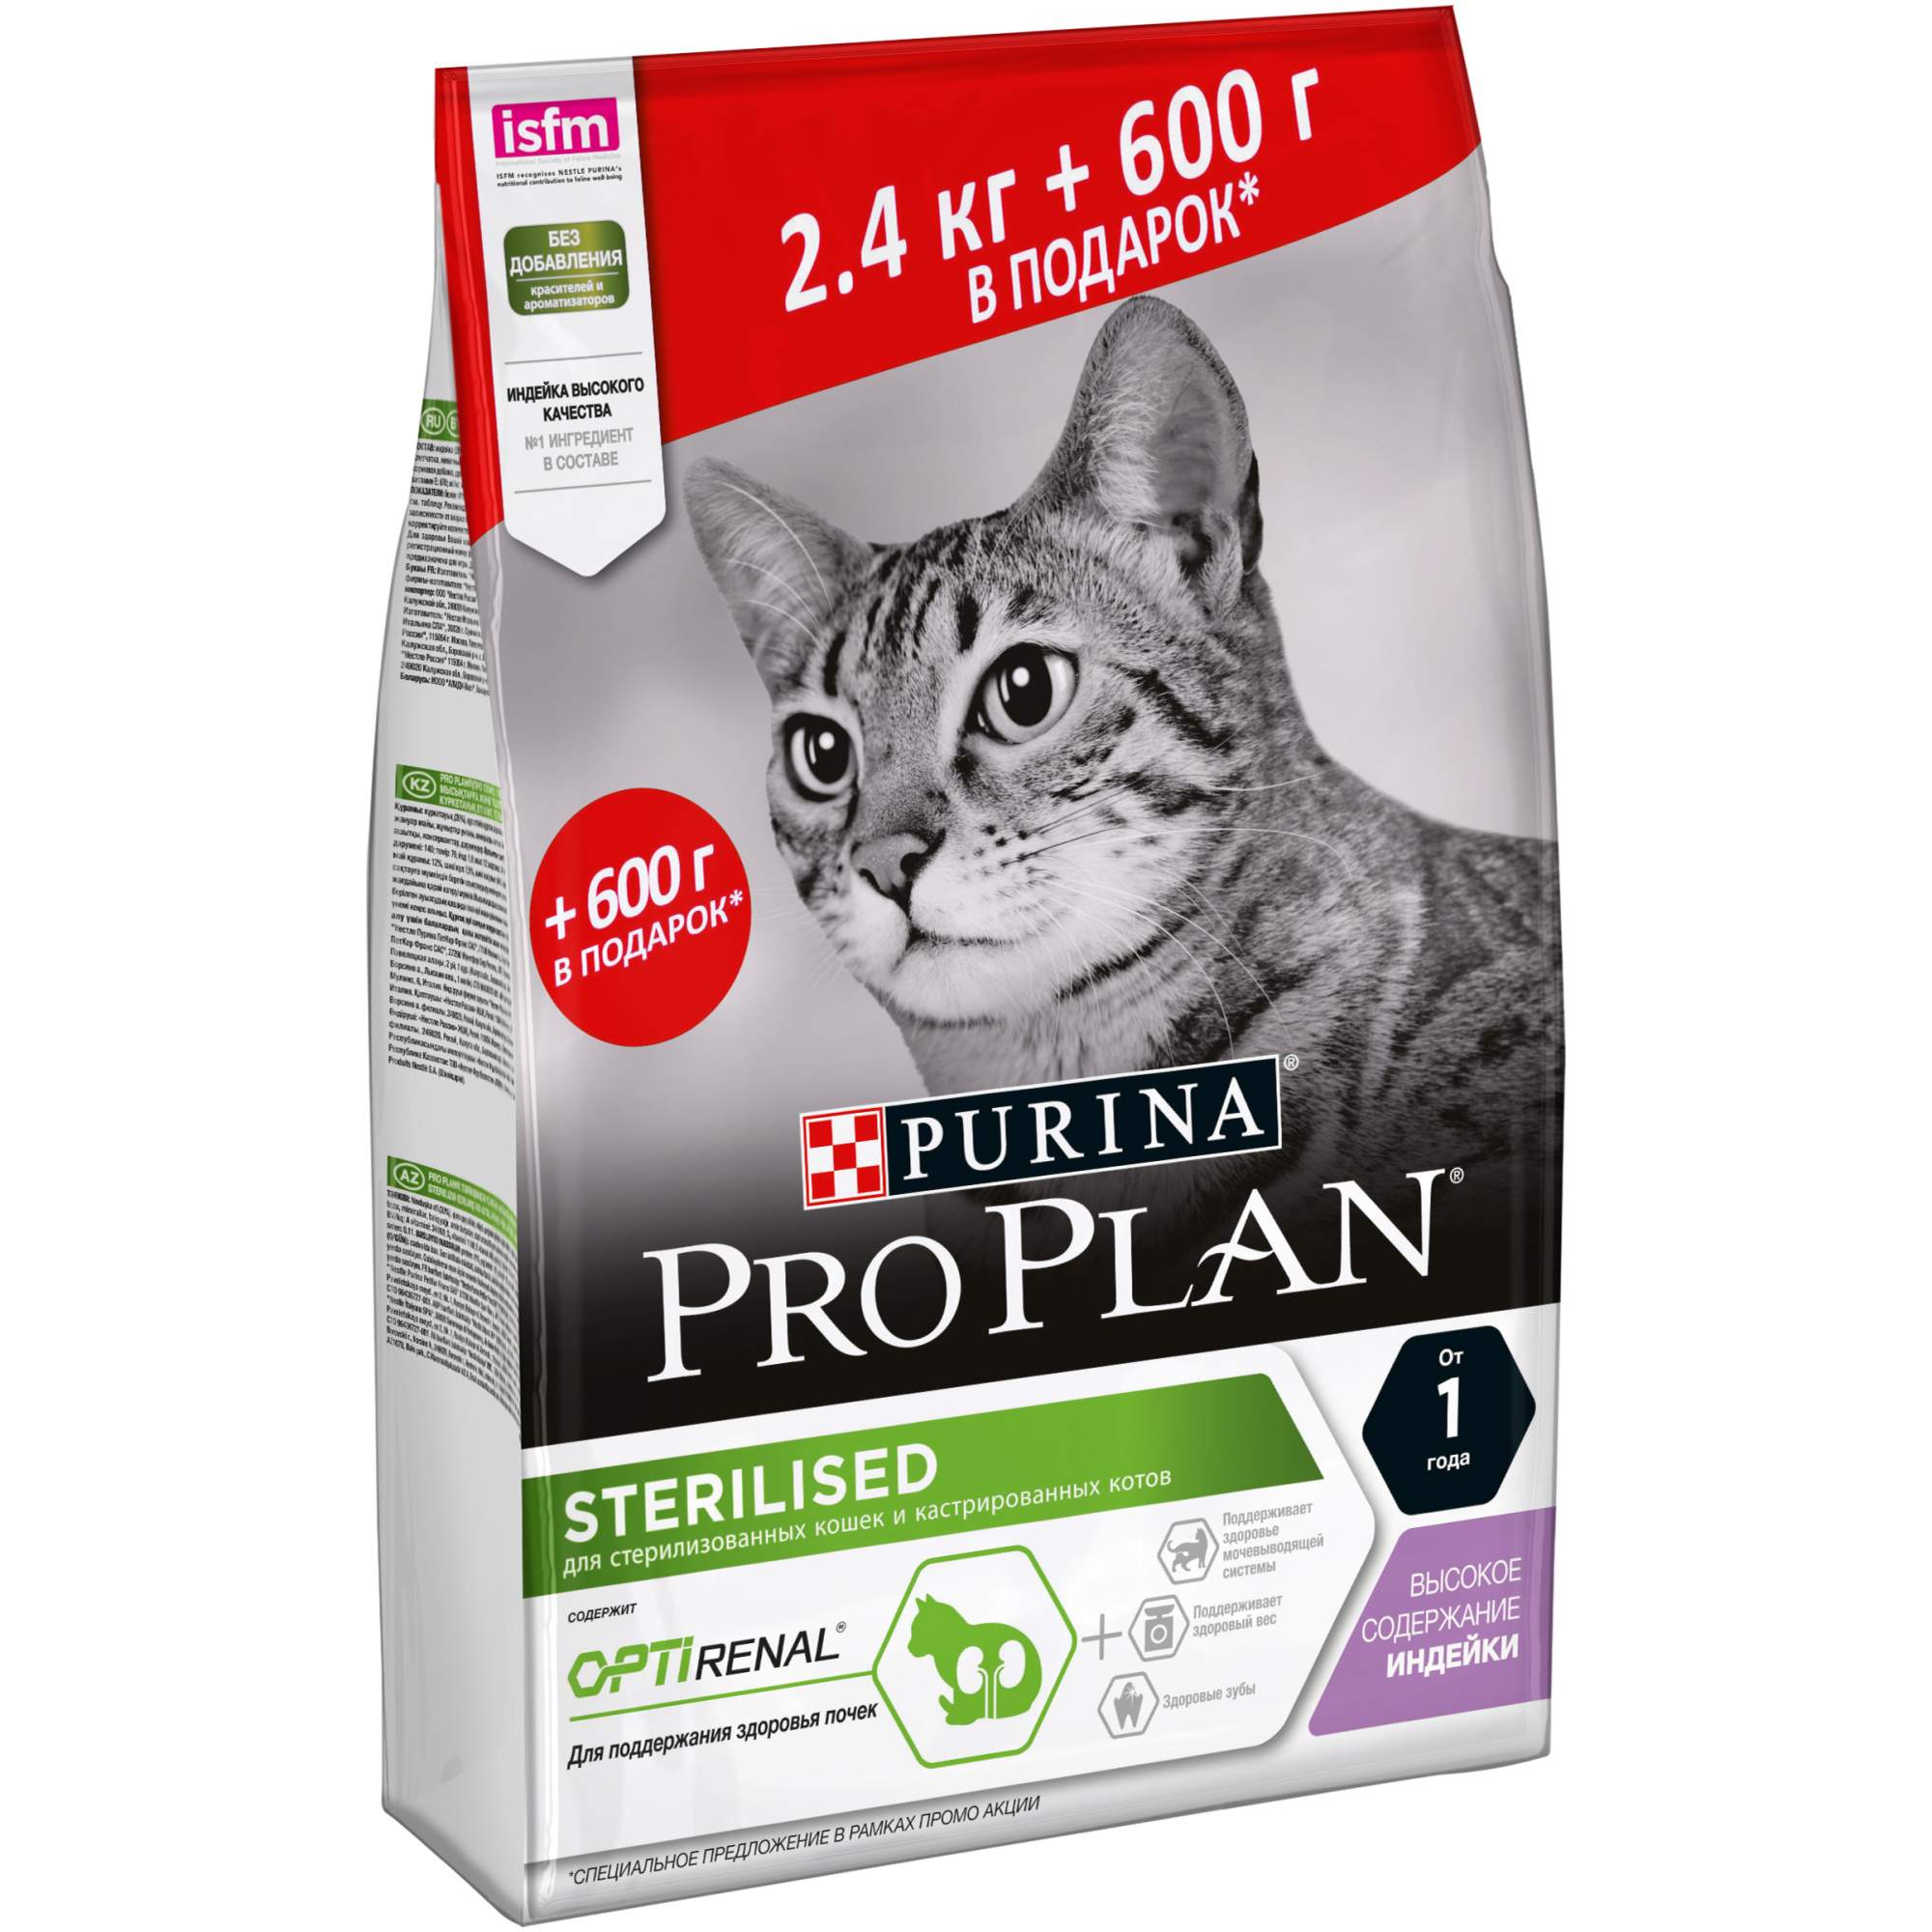 Сухой корм для кошек PRO PLAN Sterilised Optirenal, индейка, 2,4кг + 600г